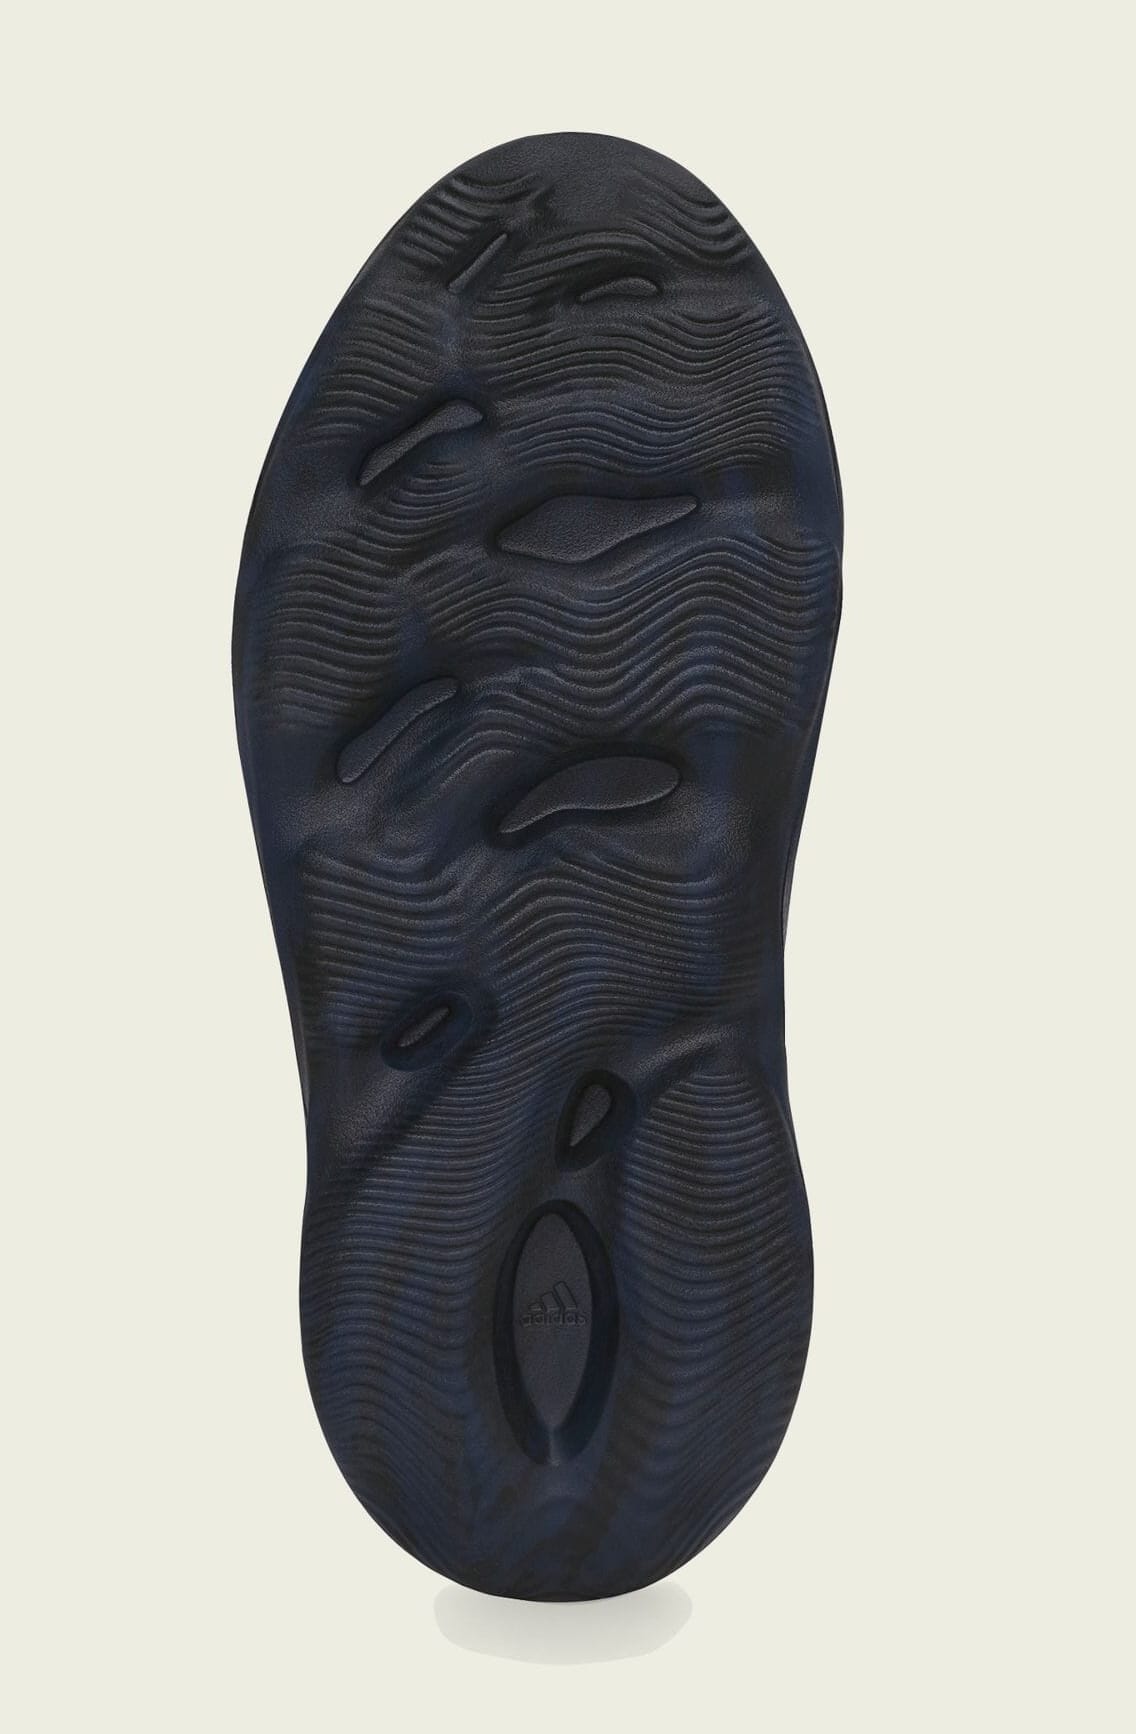 Adidas Yeezy Foam Runner 'Mineral Blue' Outsole